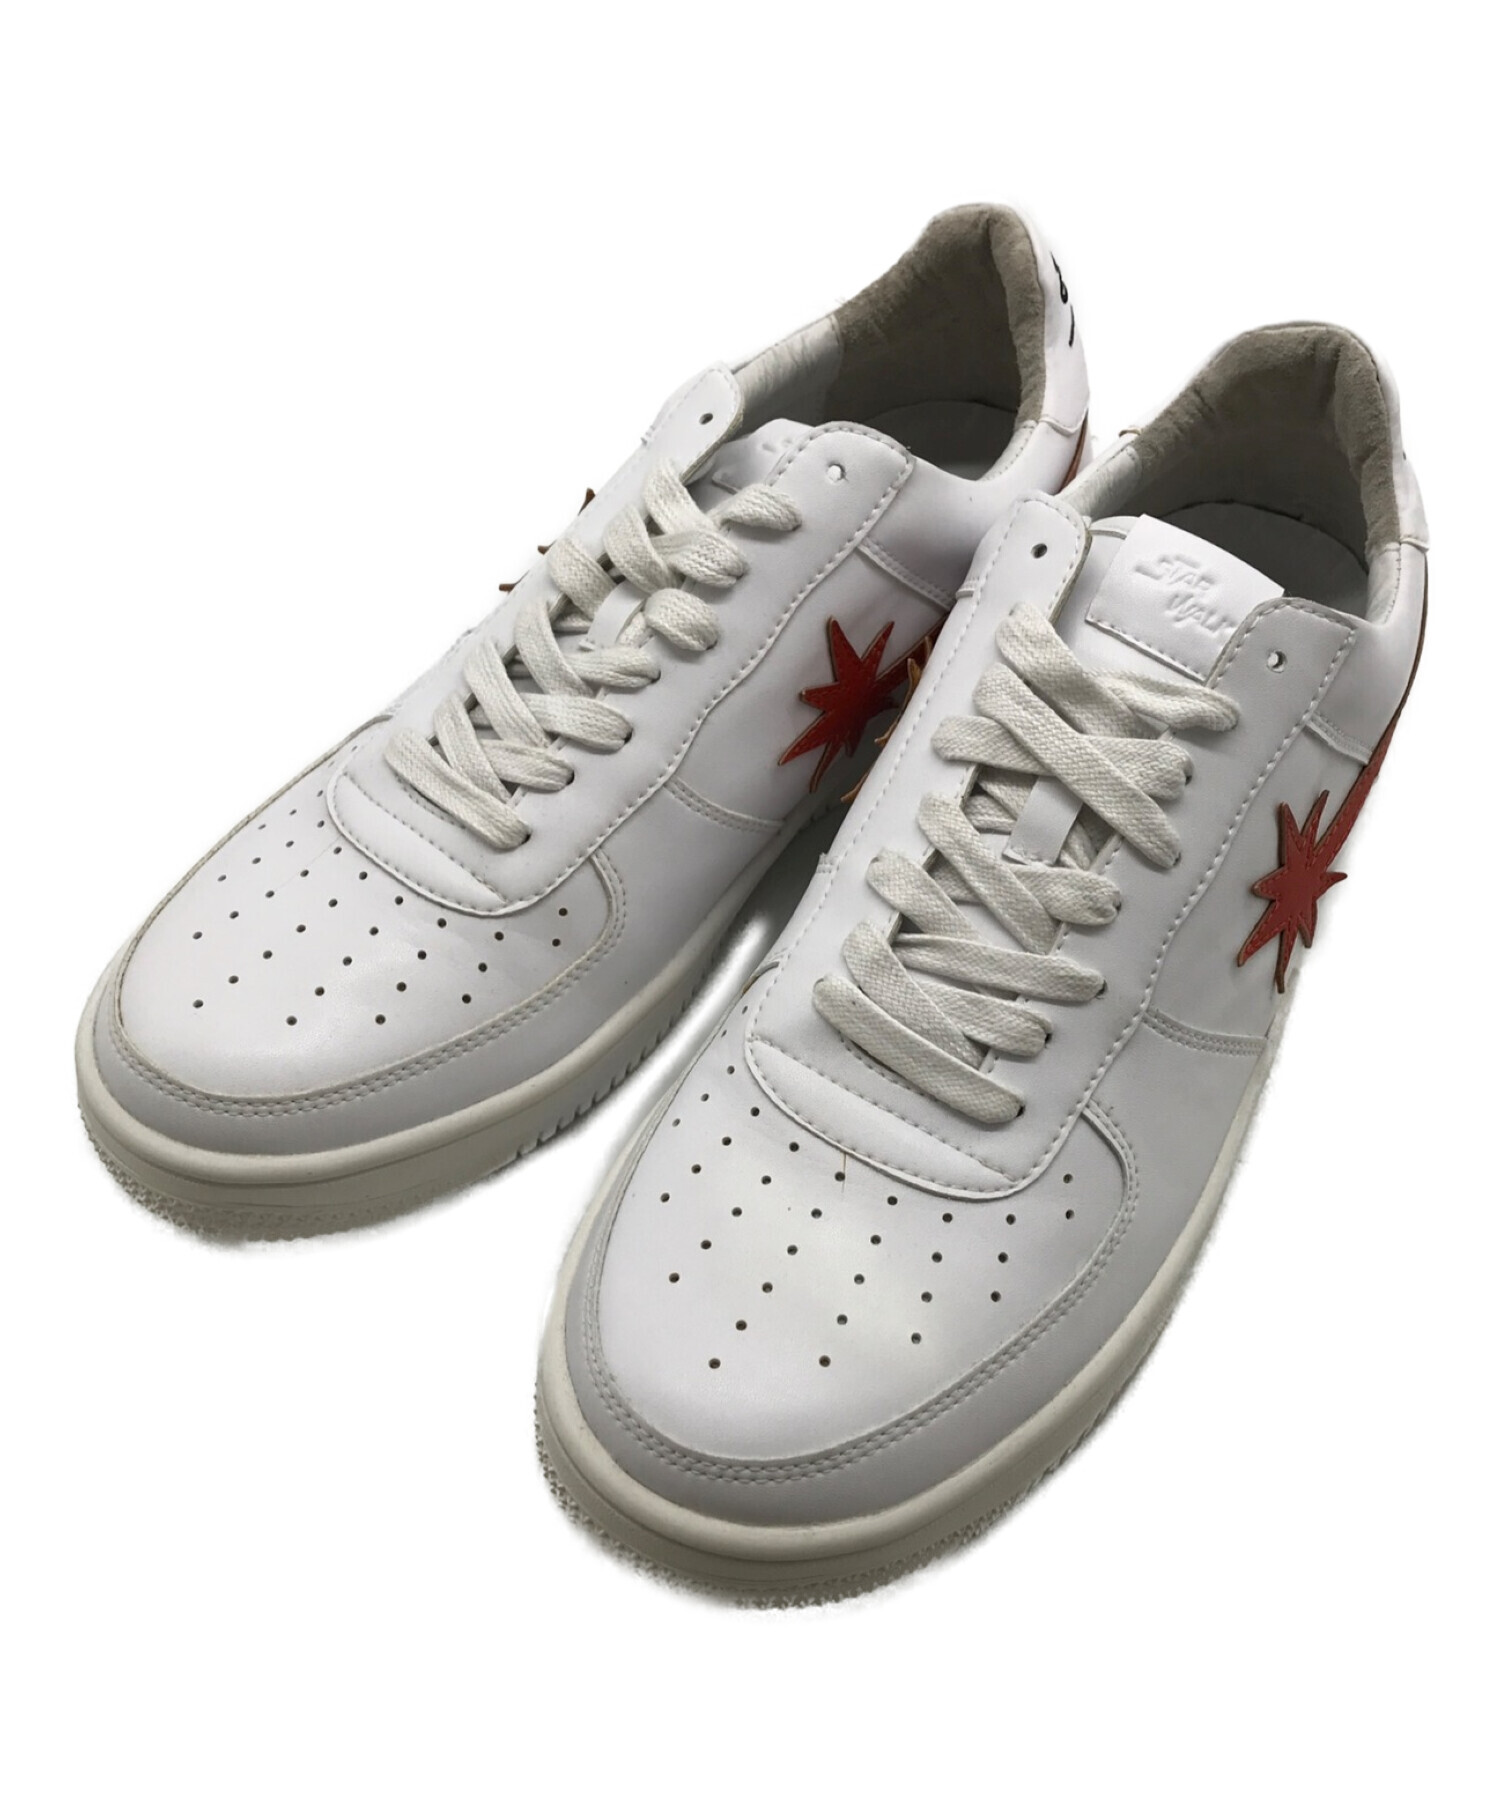 STARWALK スターウォーク sneakers スニーカー - 靴